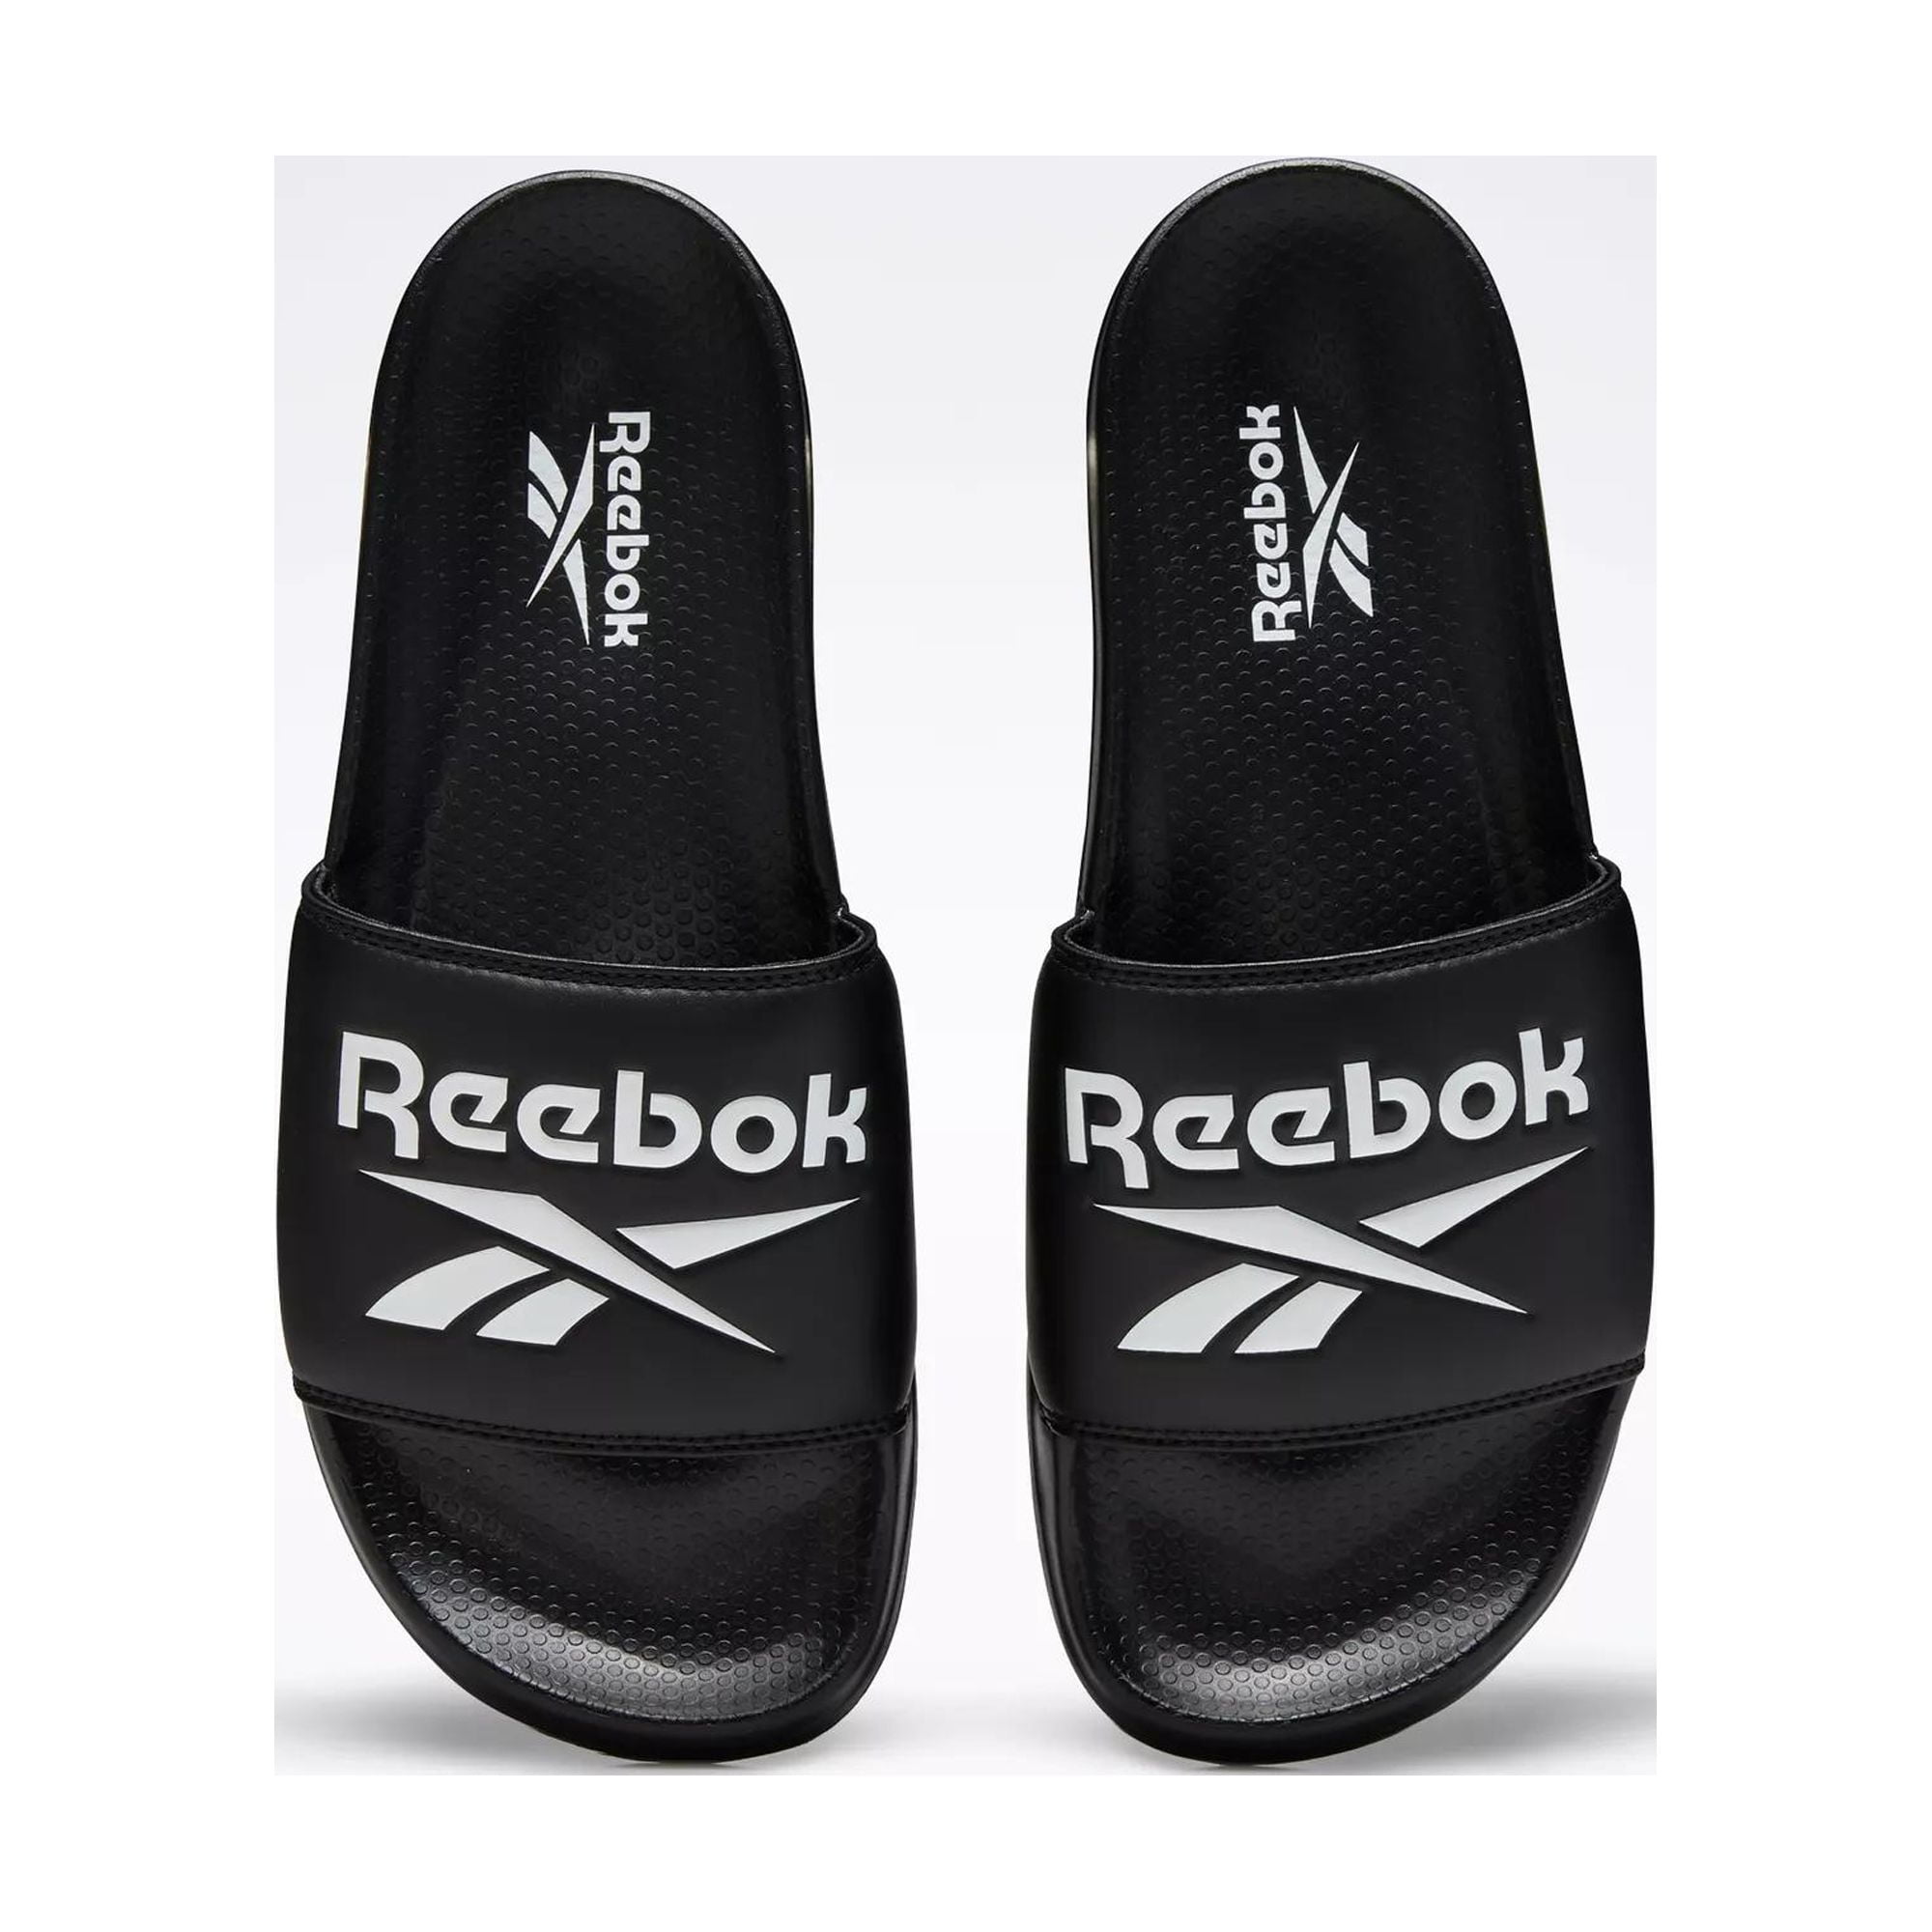 Reebok Classic Slides Shoes Walmart.com